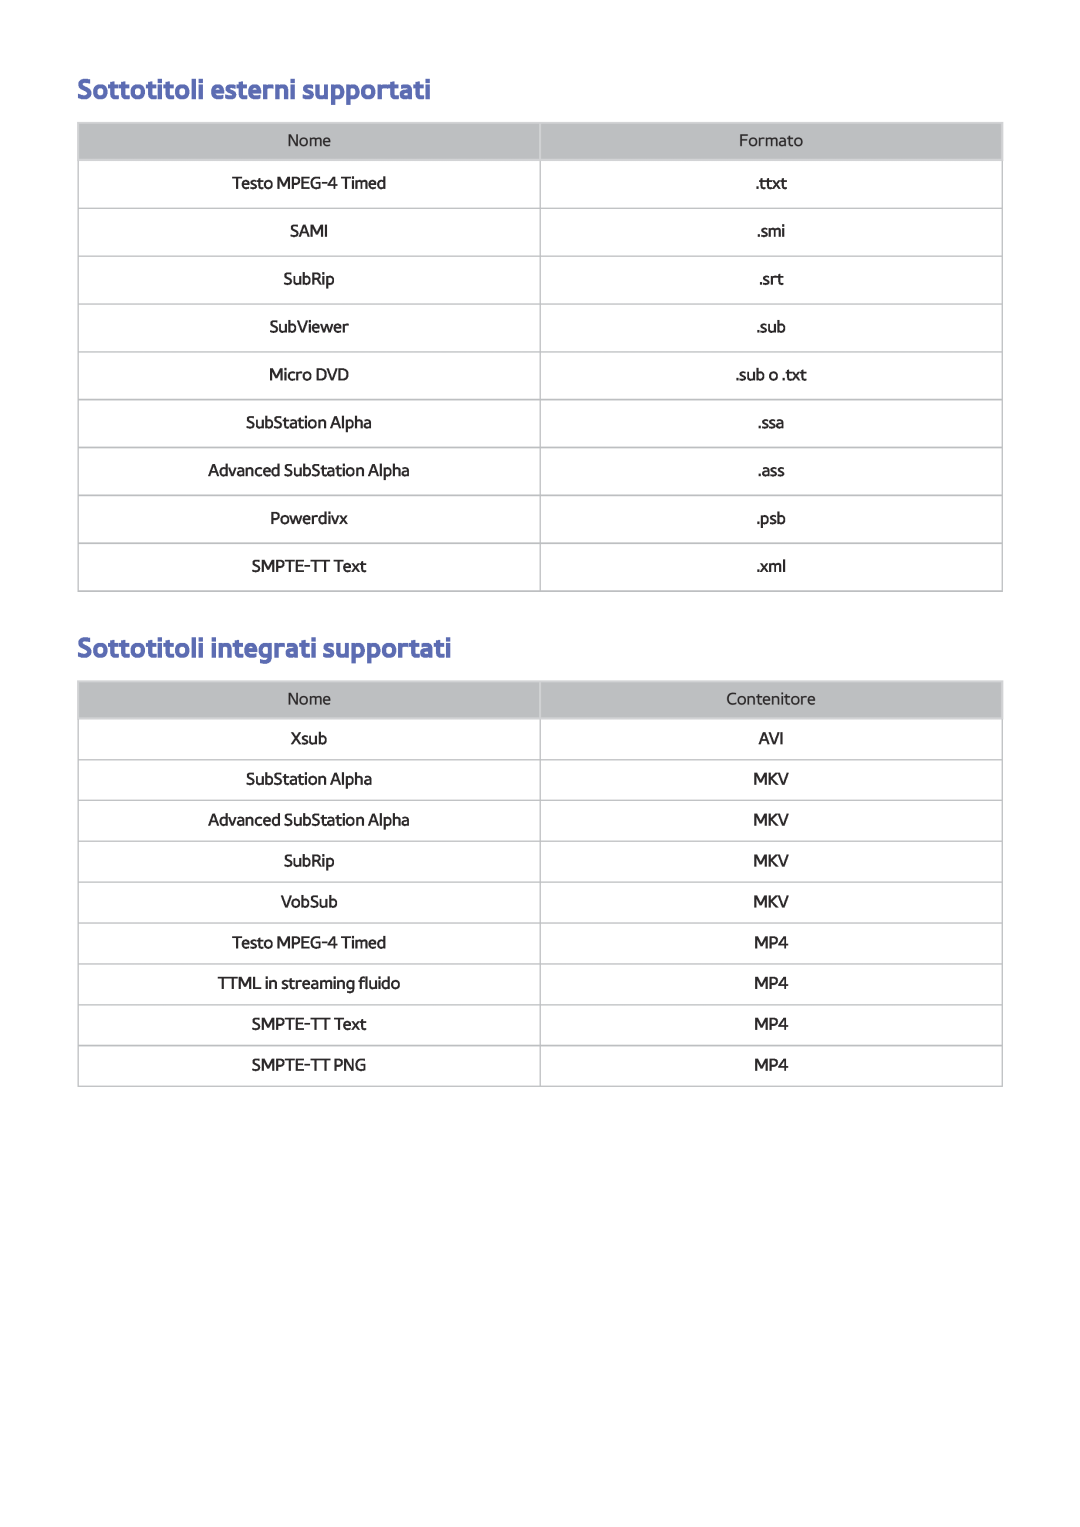 Samsung UE65JS9000TXZT, UE55JS9090QXZG, UE55JS9000LXXH Sottotitoli esterni supportati, Sottotitoli integrati supportati 